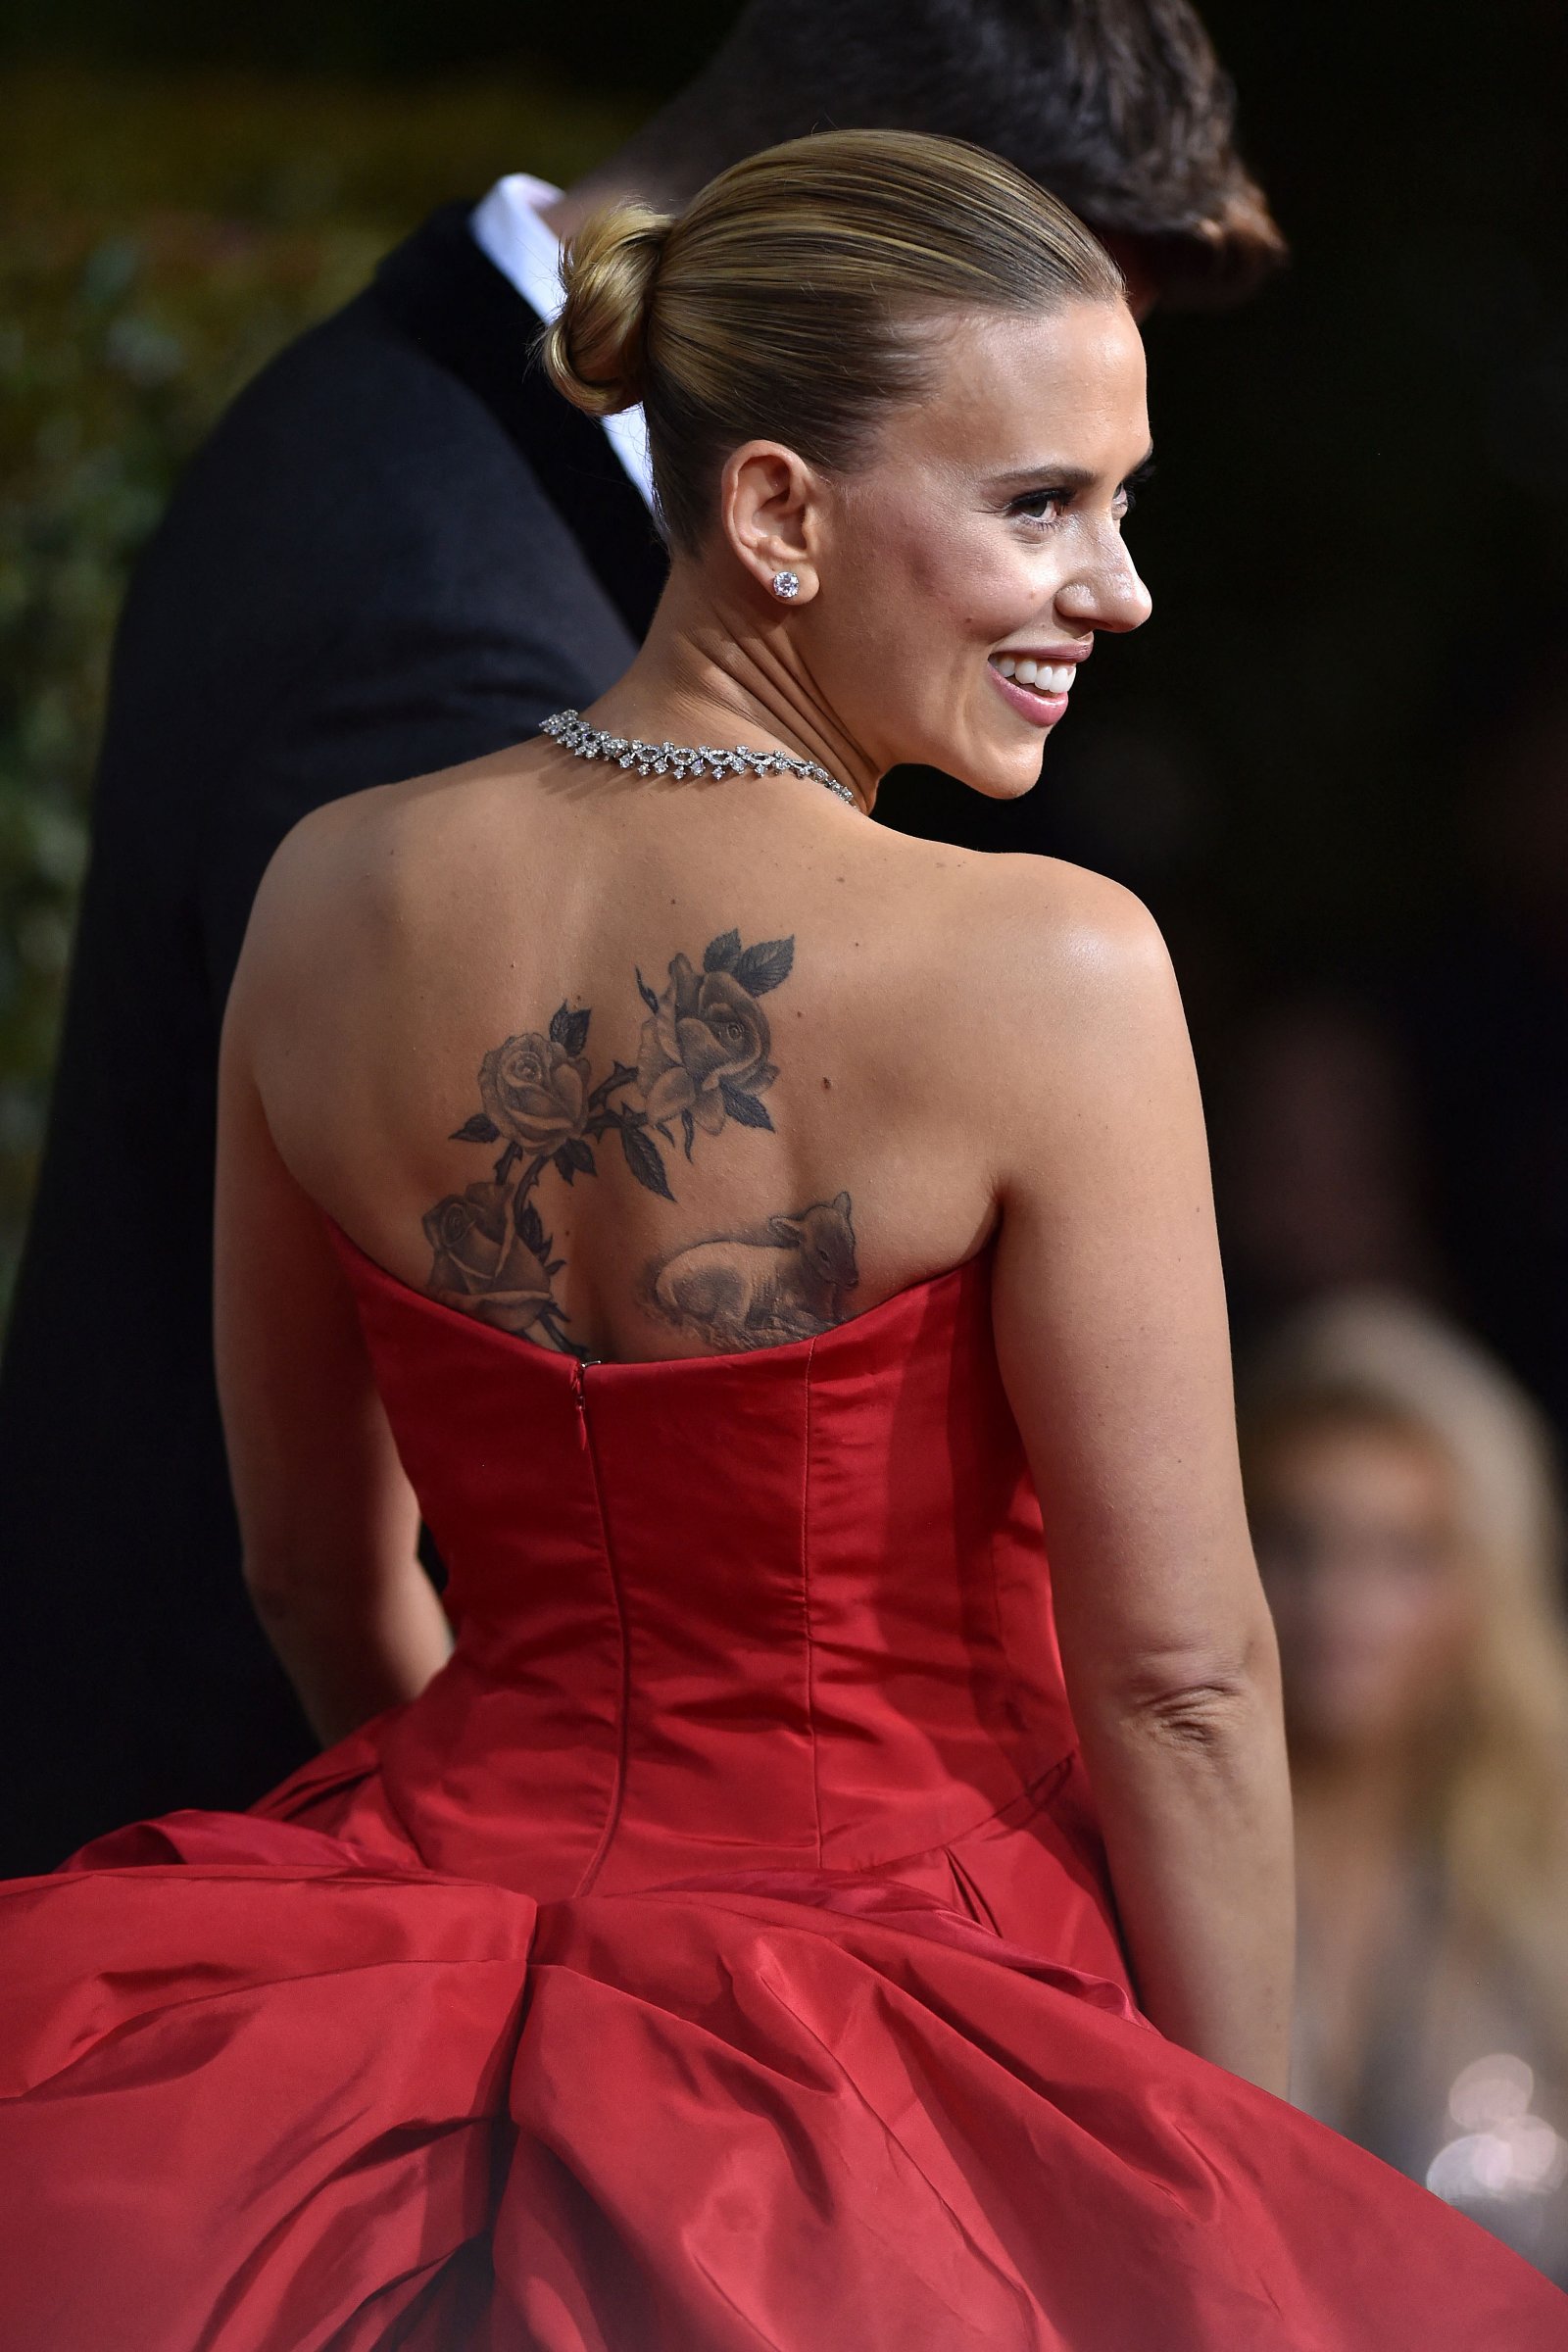 Scarlett Johansson Hot in Red Dress displaying her tattoo